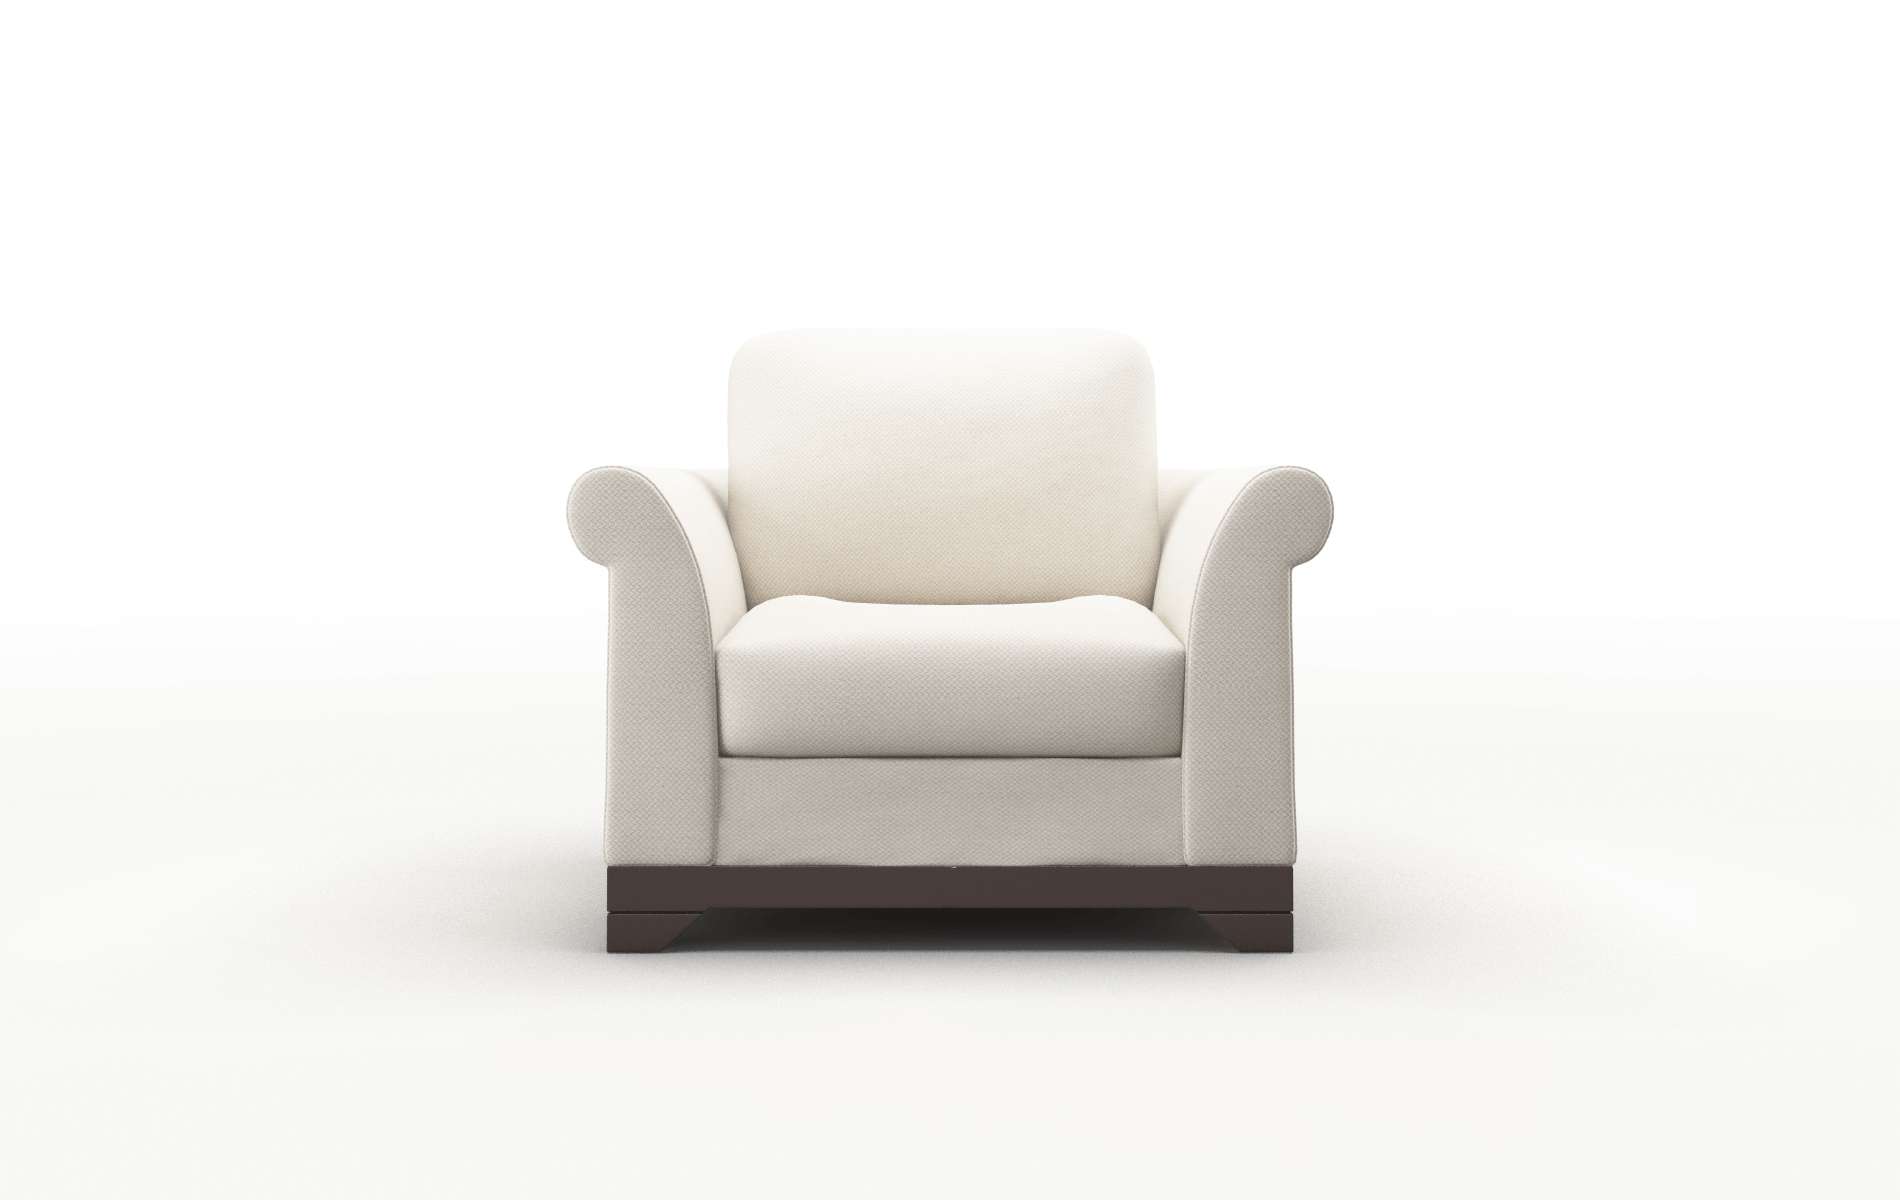 Denver Malibu Linen chair espresso legs